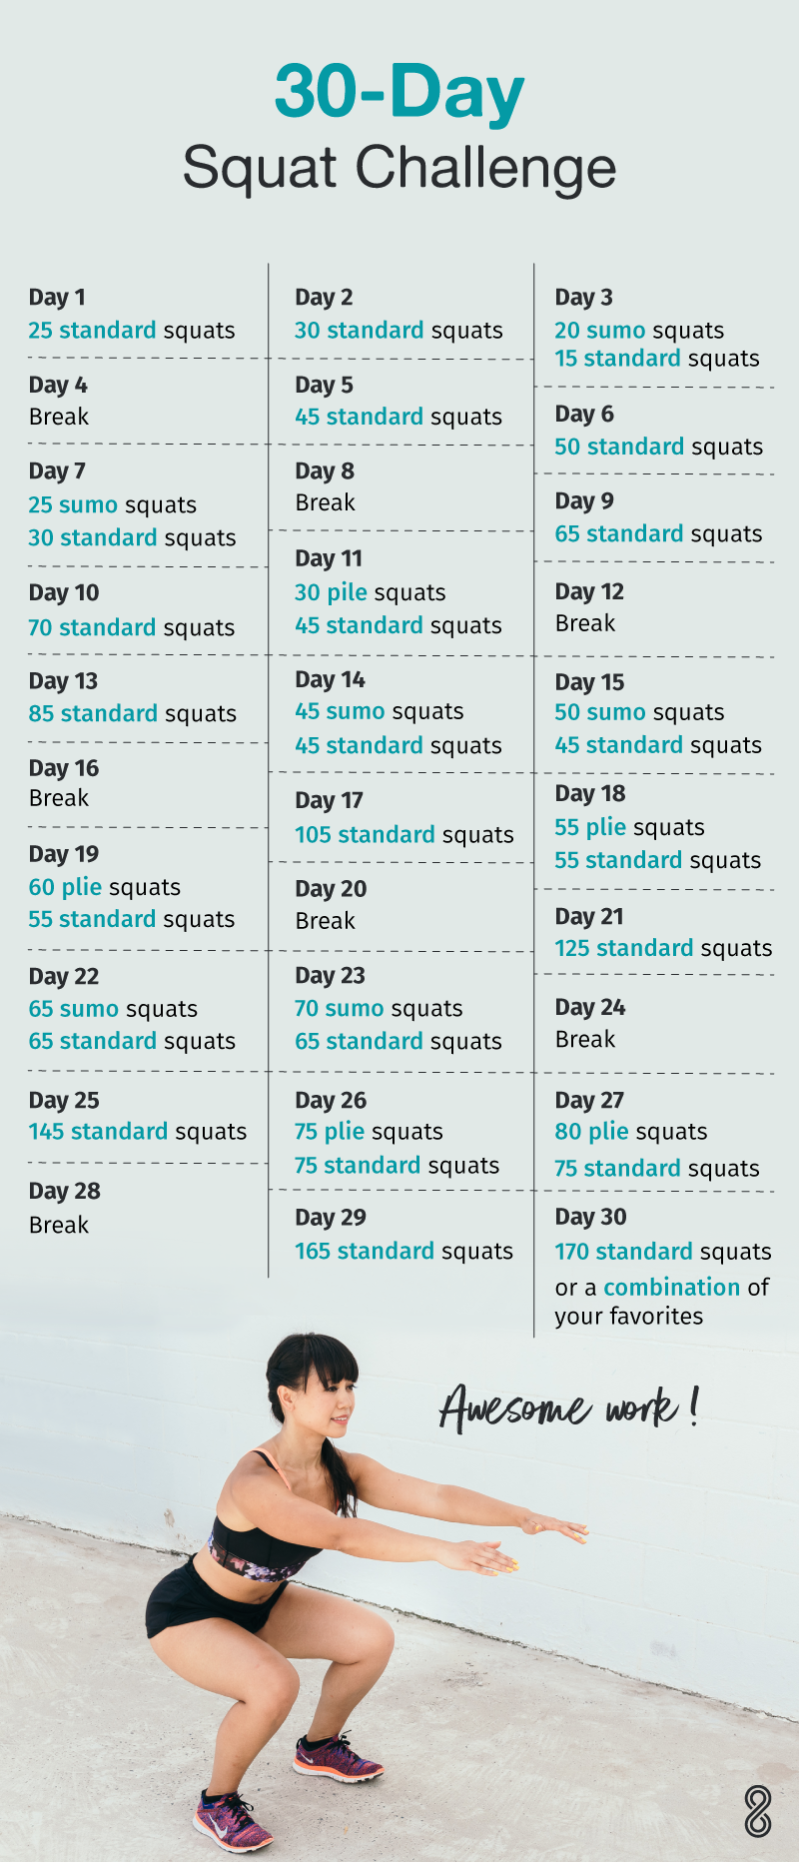 squat-it-like-it-s-hot-30-day-squat-challenge-8fit